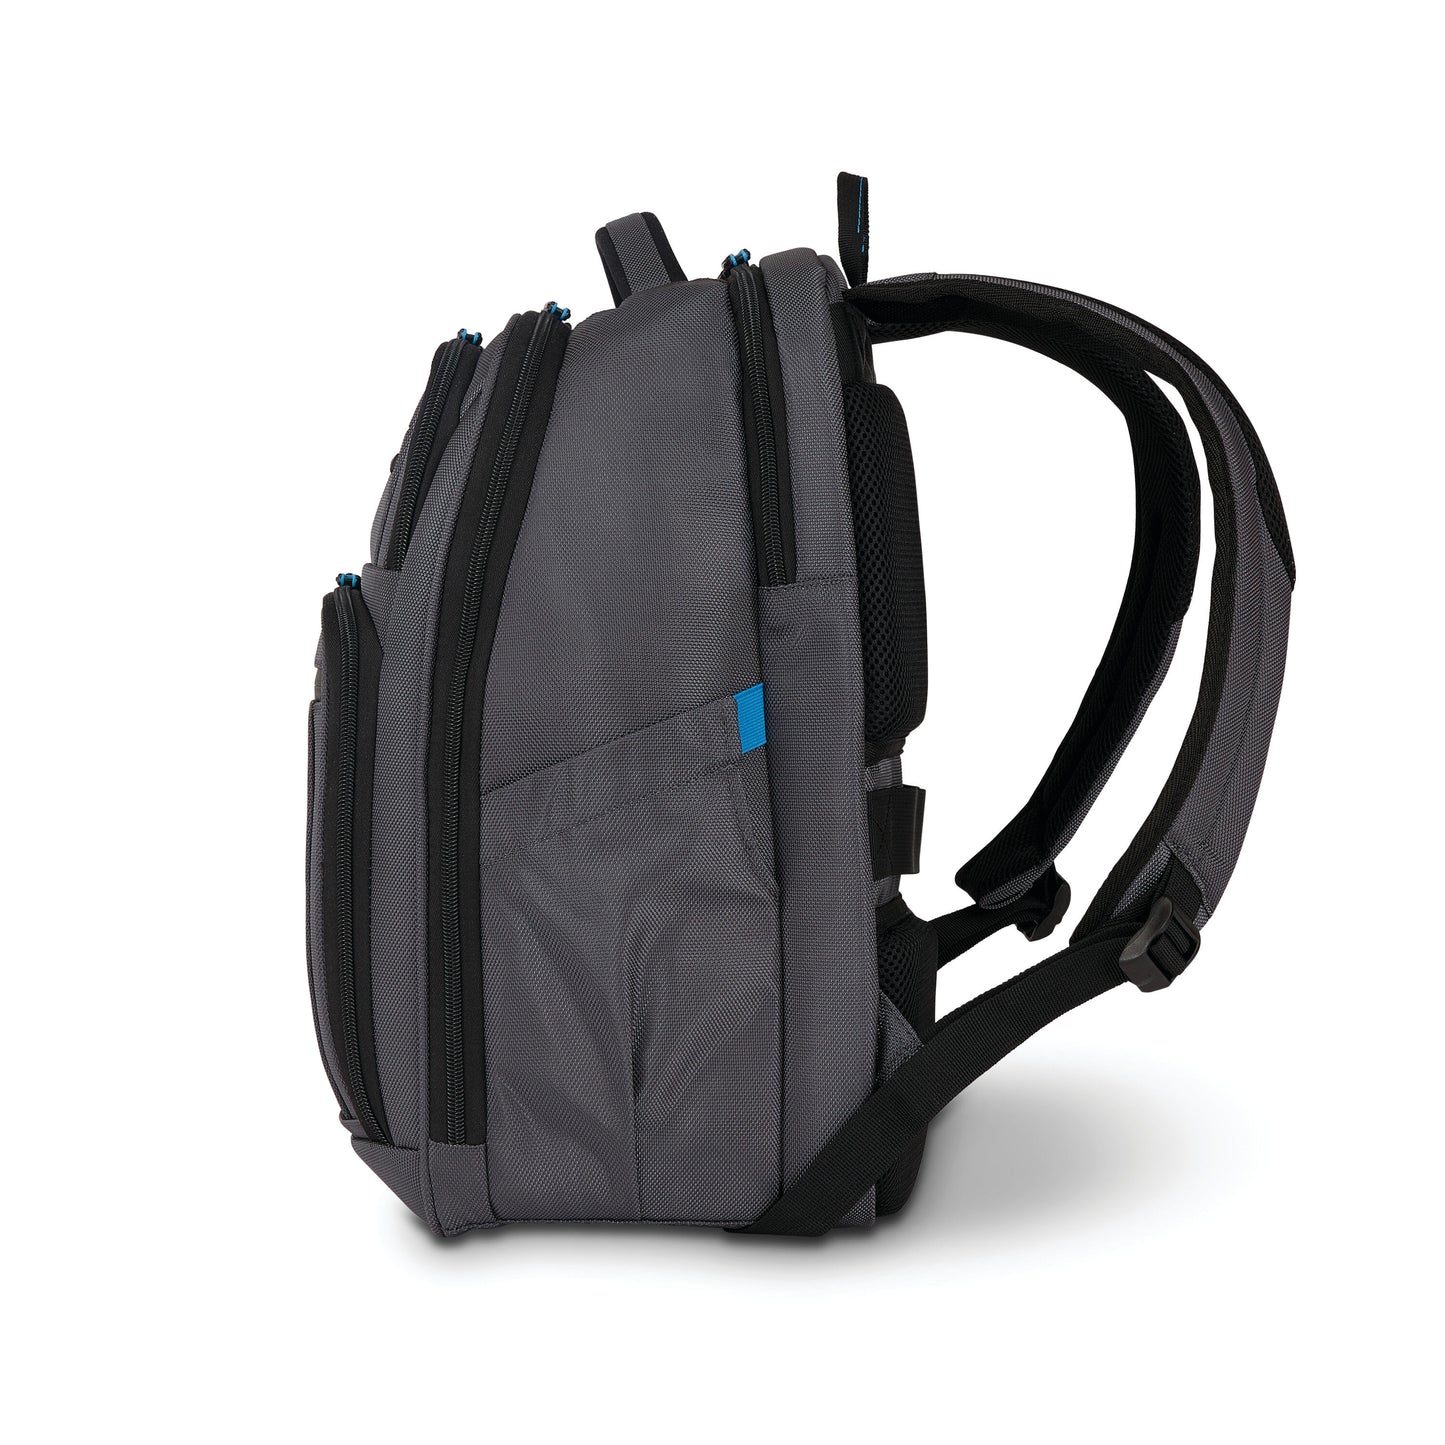 Mochila Samsonite Novex Perfect Fit Laptop Backpack - Dark Gray